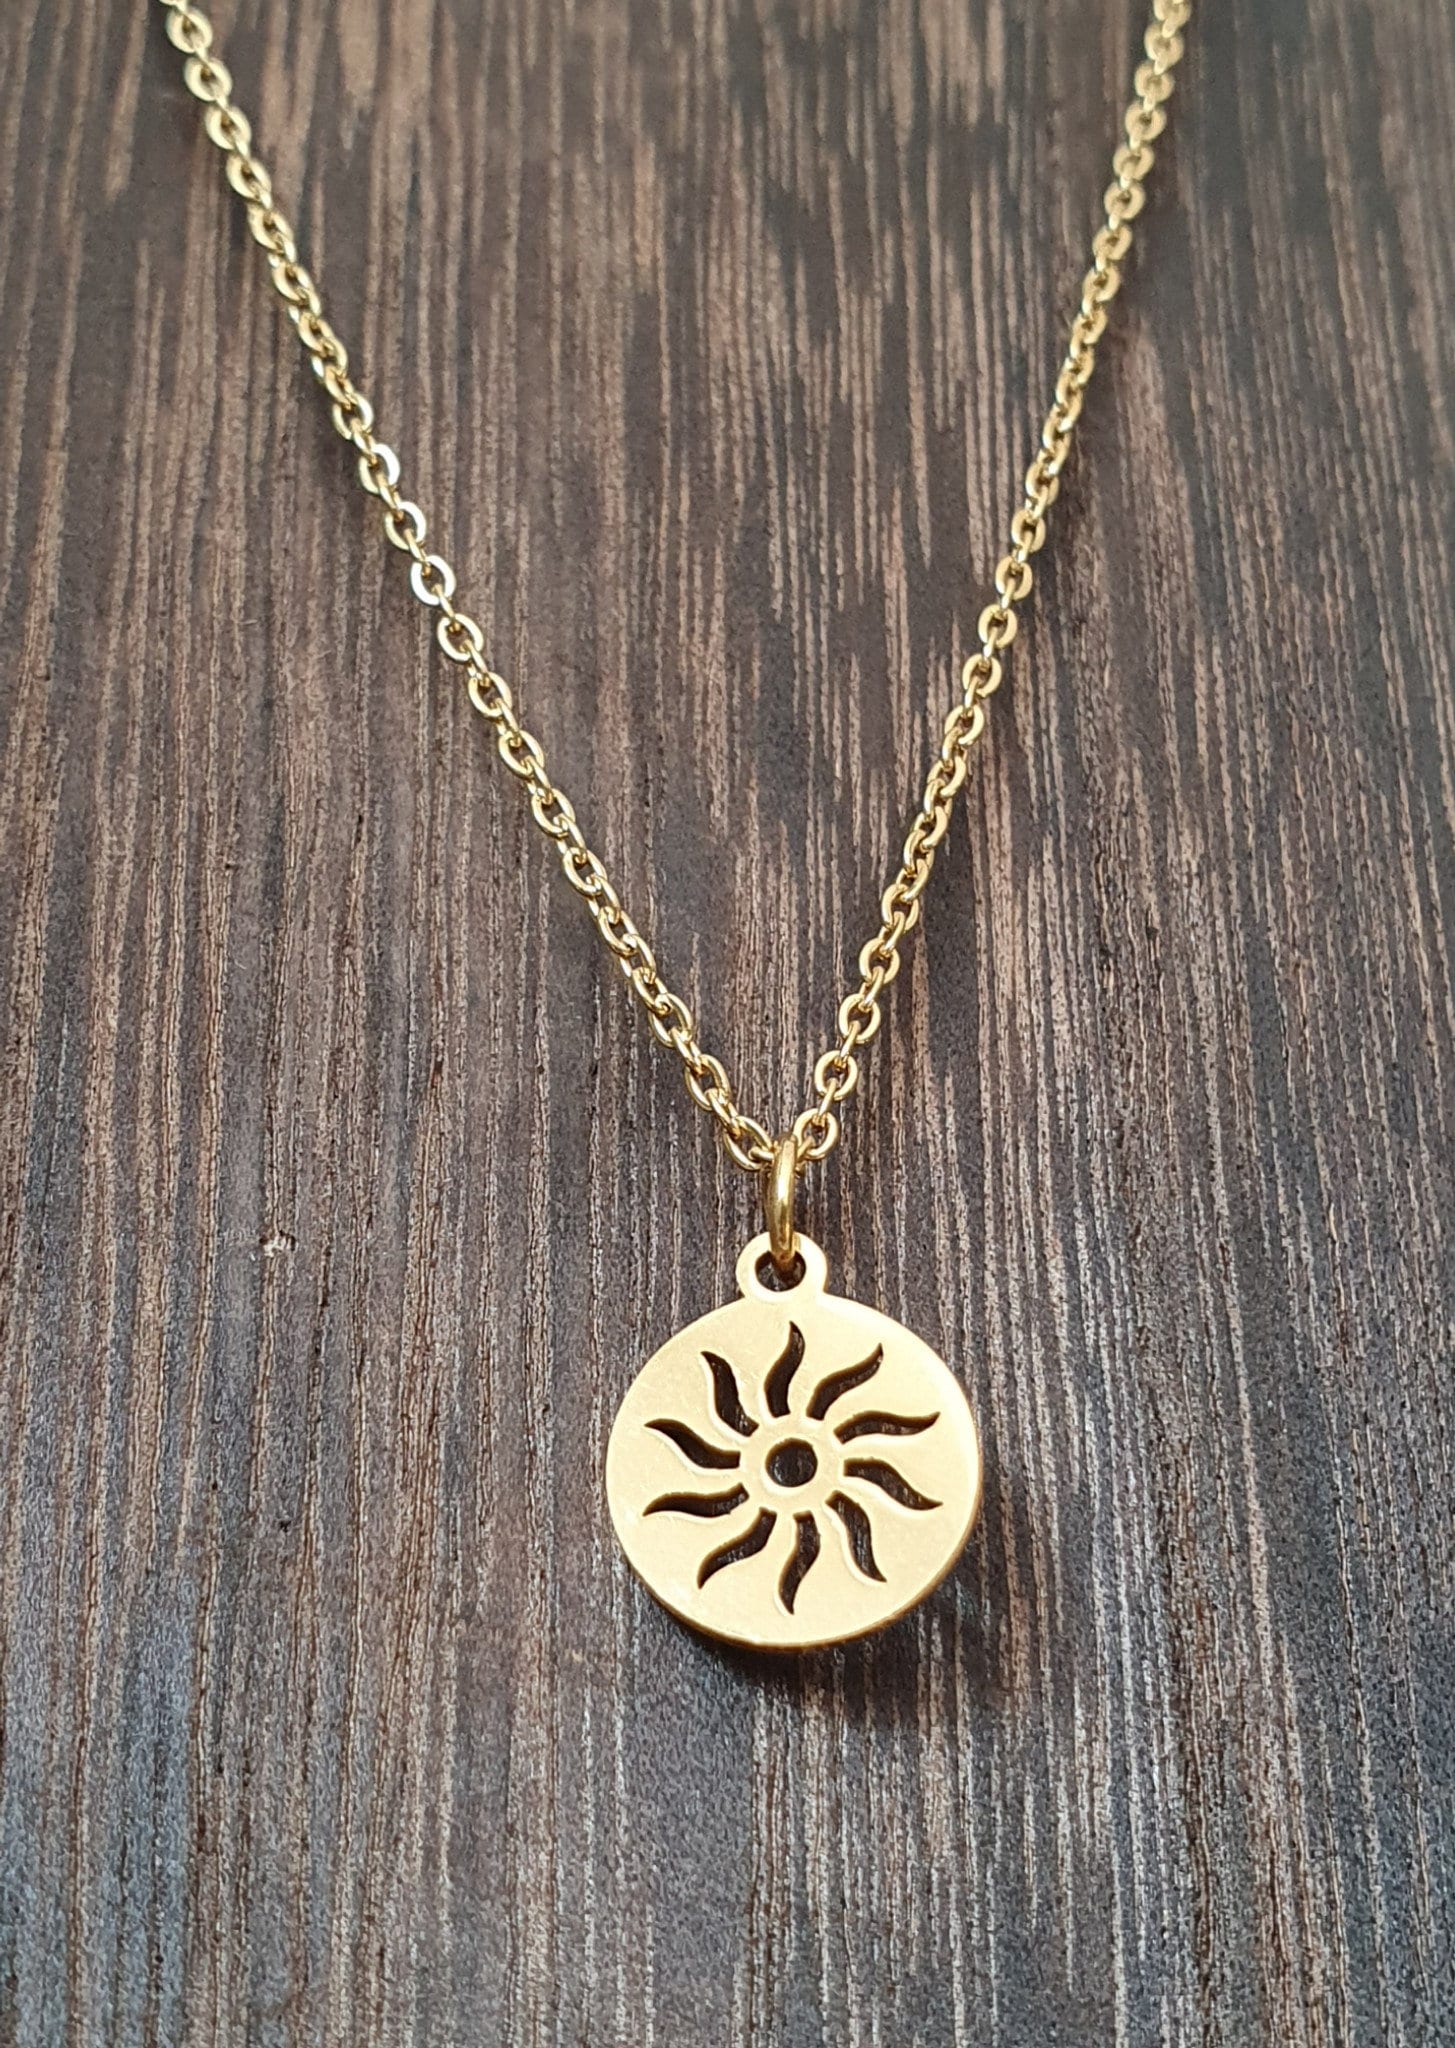 Stainless steel necklace sun sun pendant sun symbol | Etsy